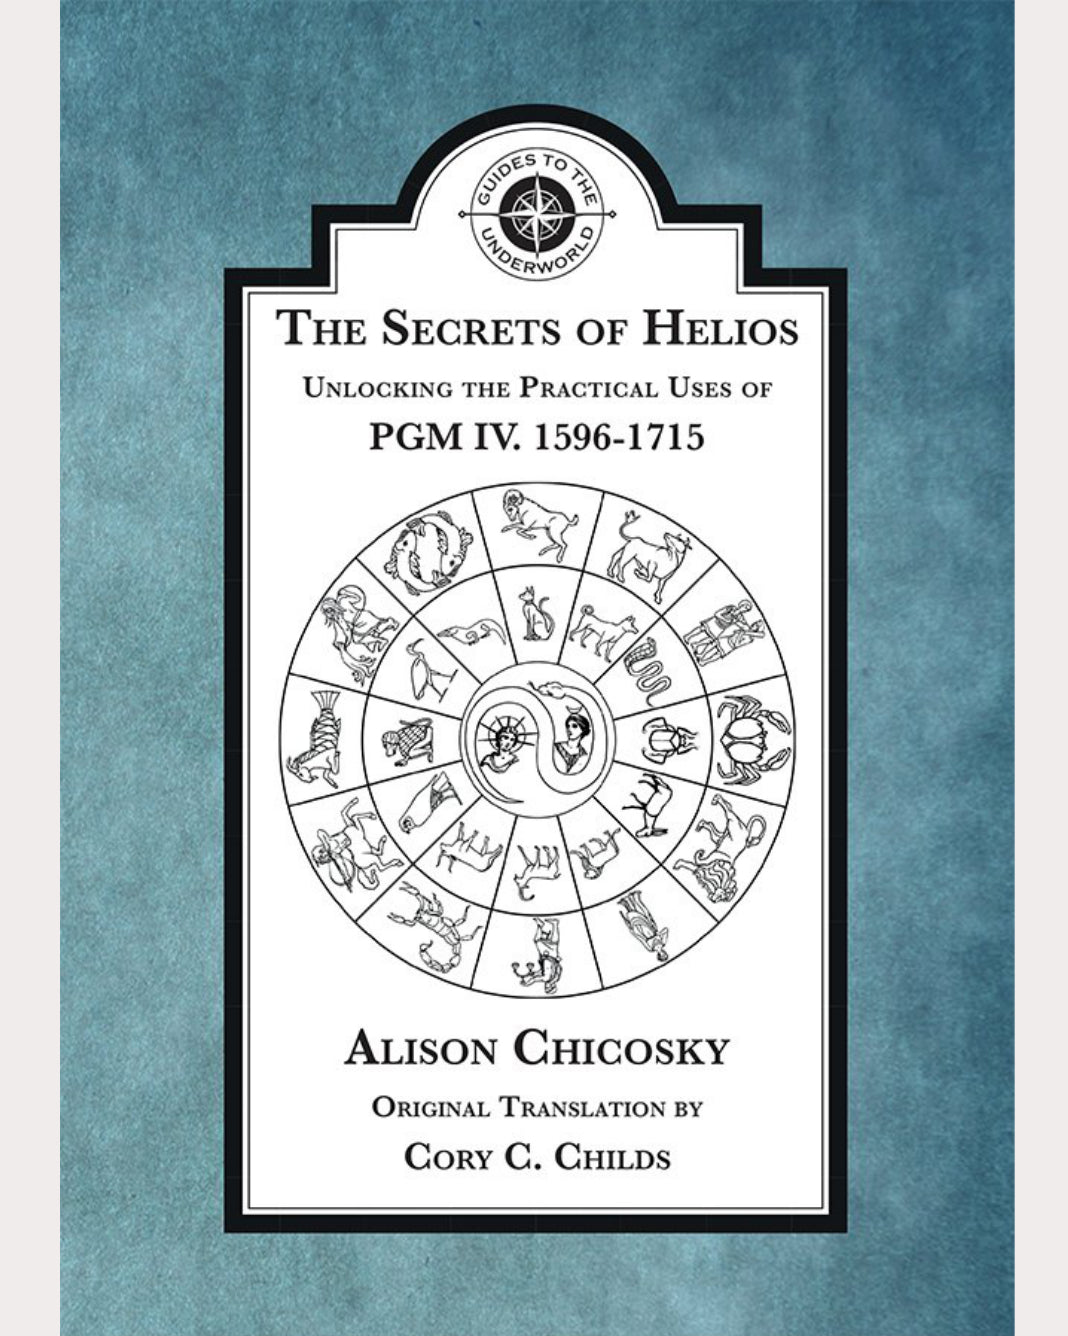 The Secrets of Helios